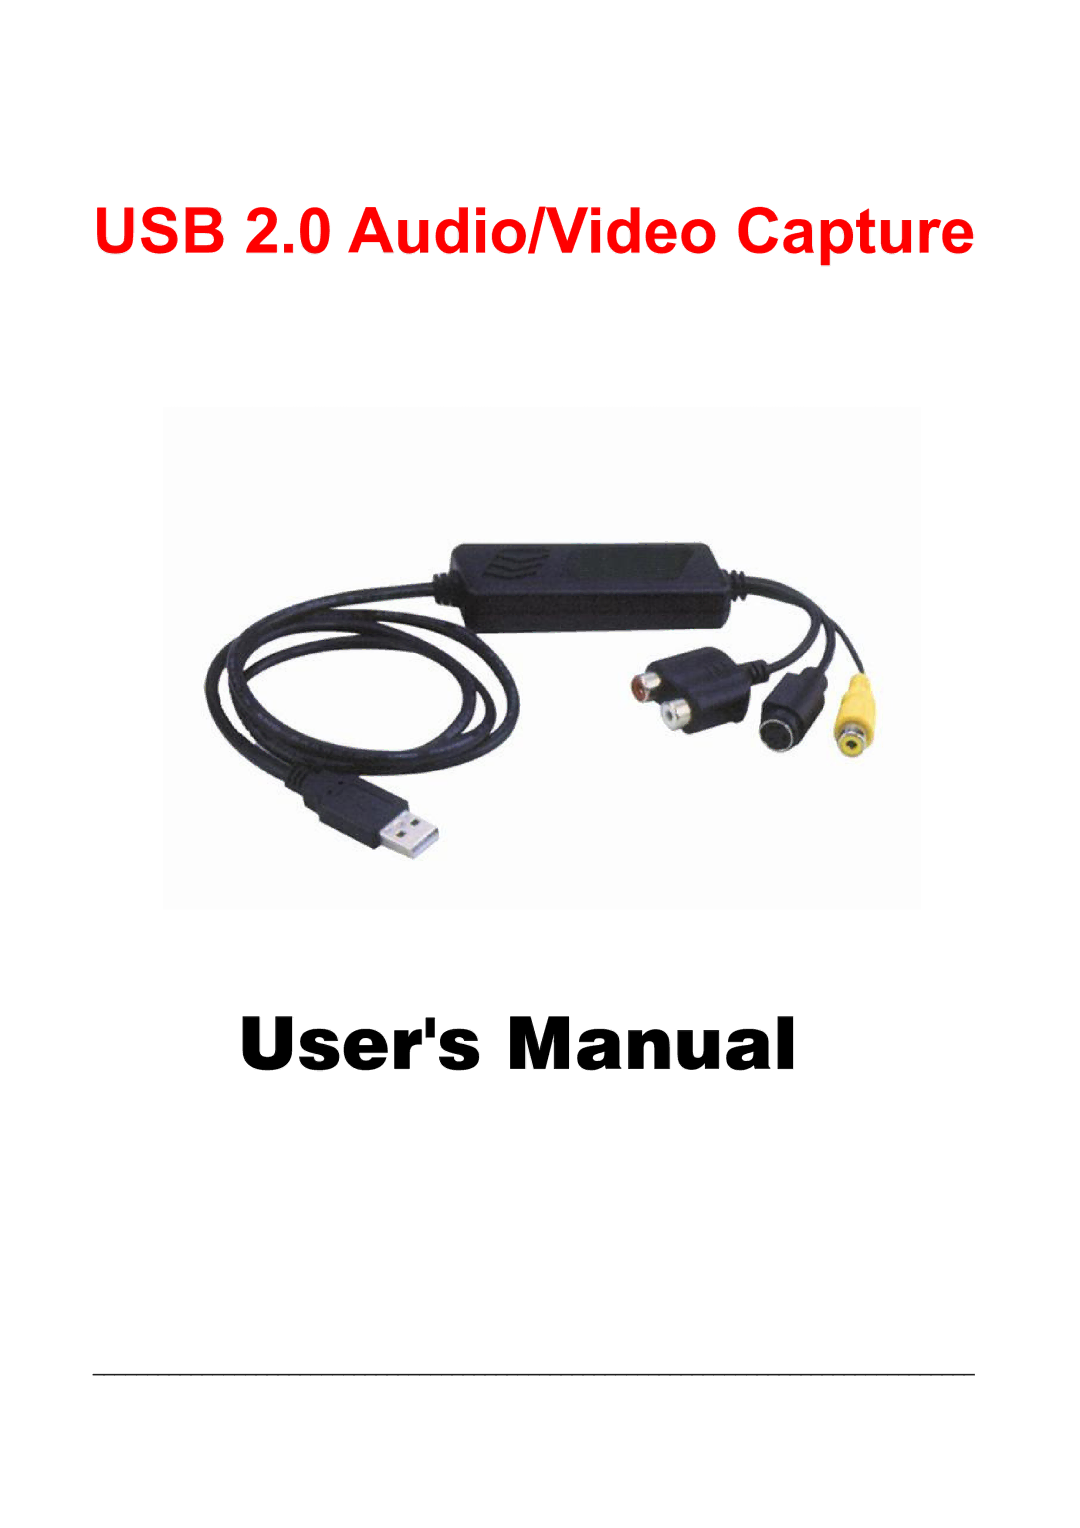 Quatech user manual USB 2.0 Audio/Video Capture 